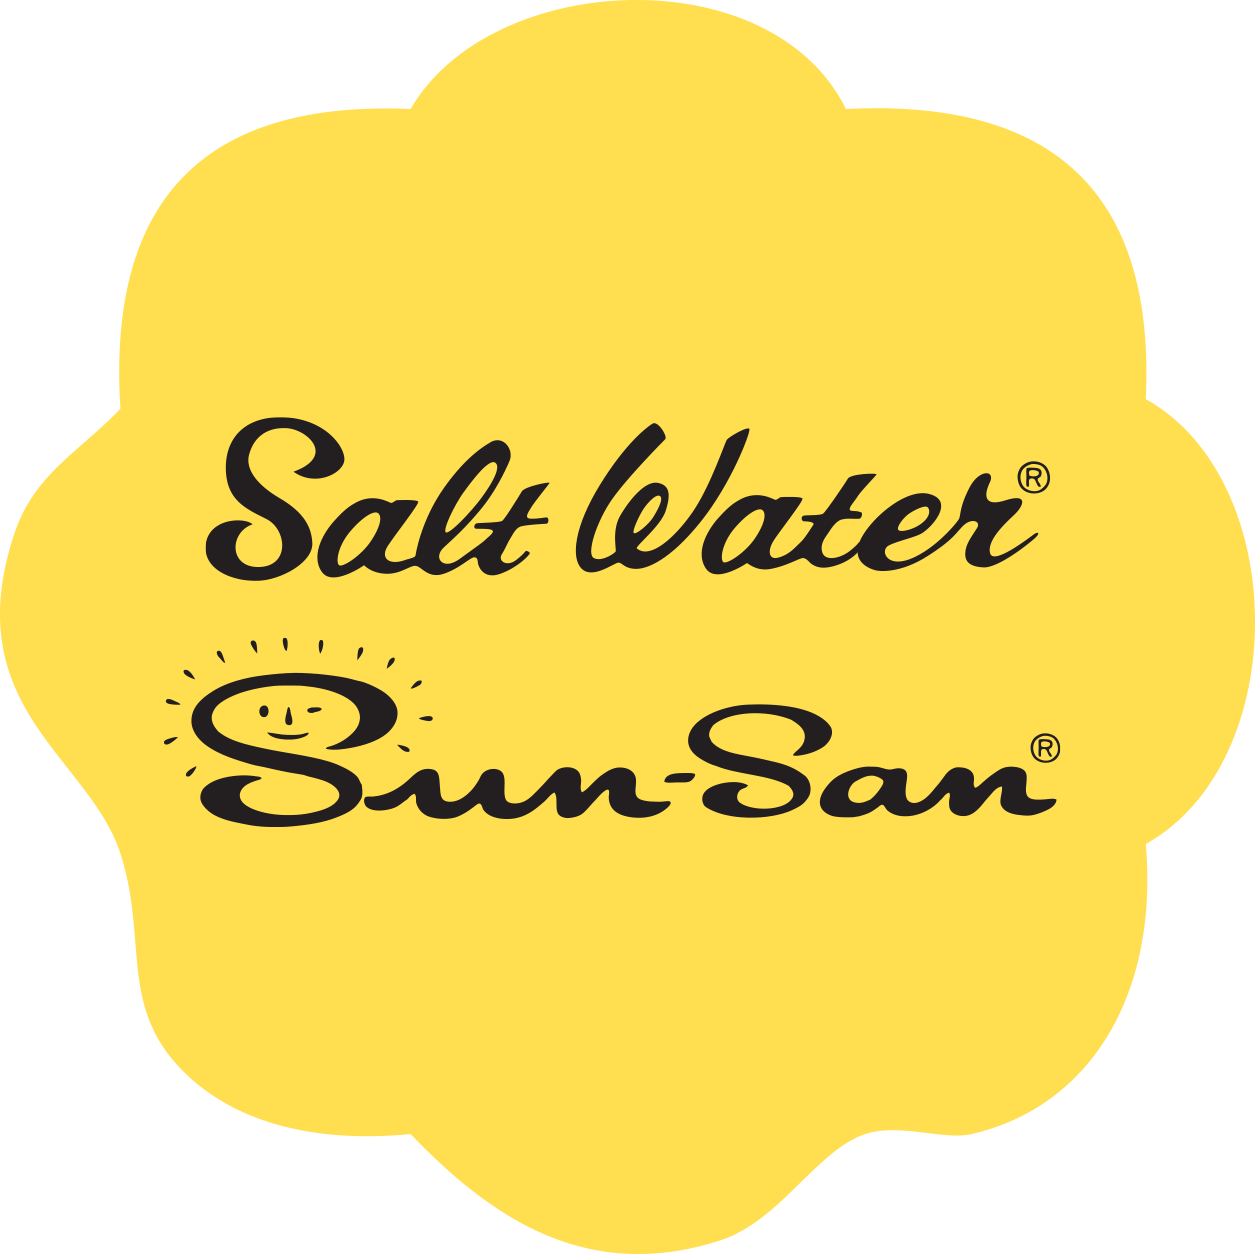 Sun-San Saltwater Sandals